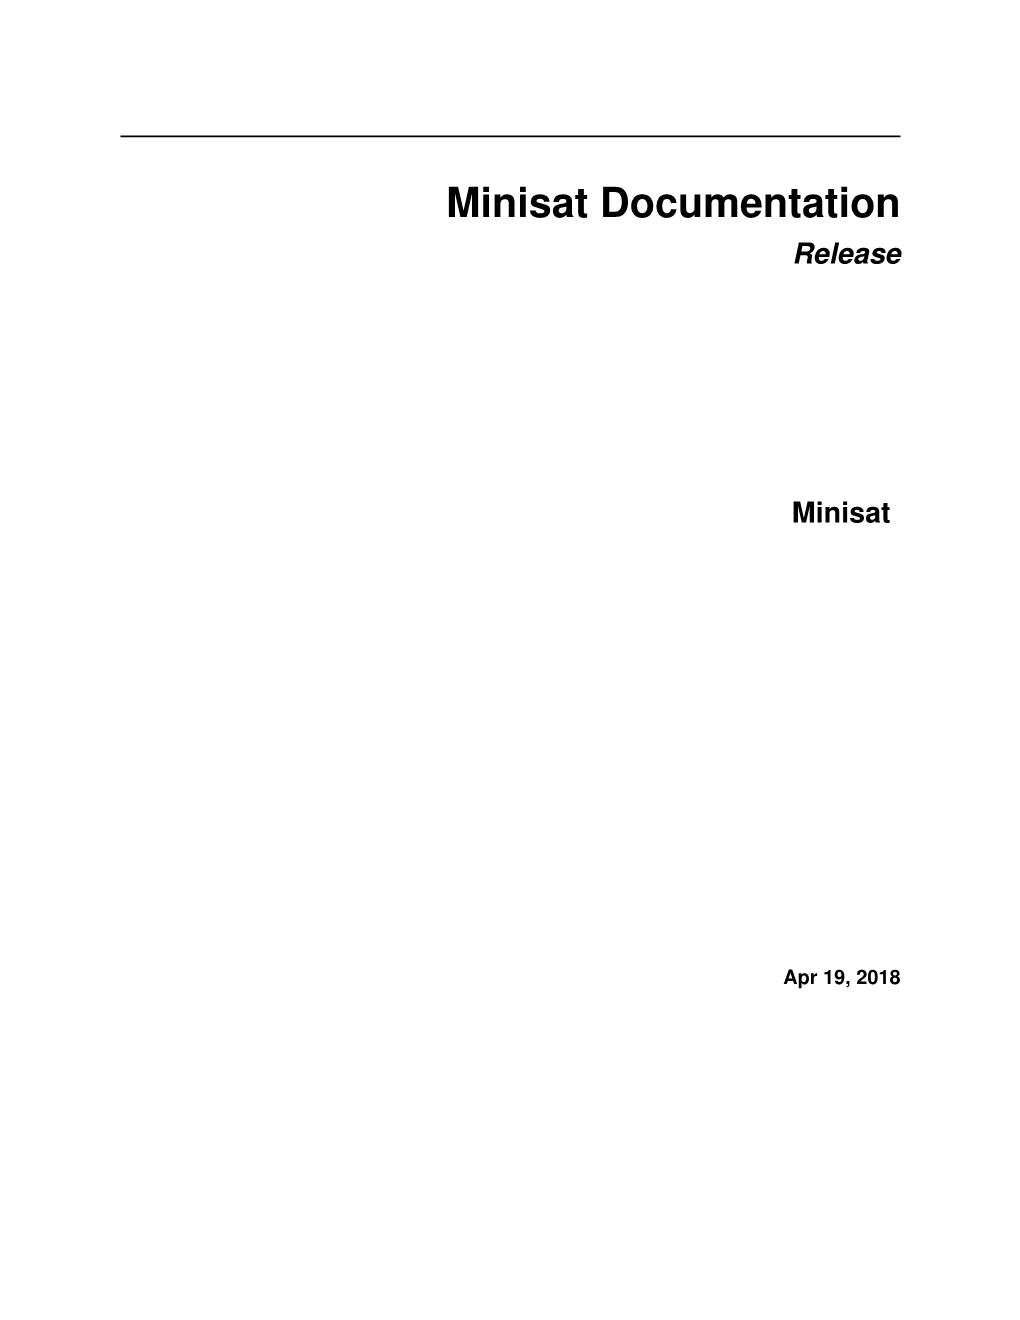 Minisat Documentation Release